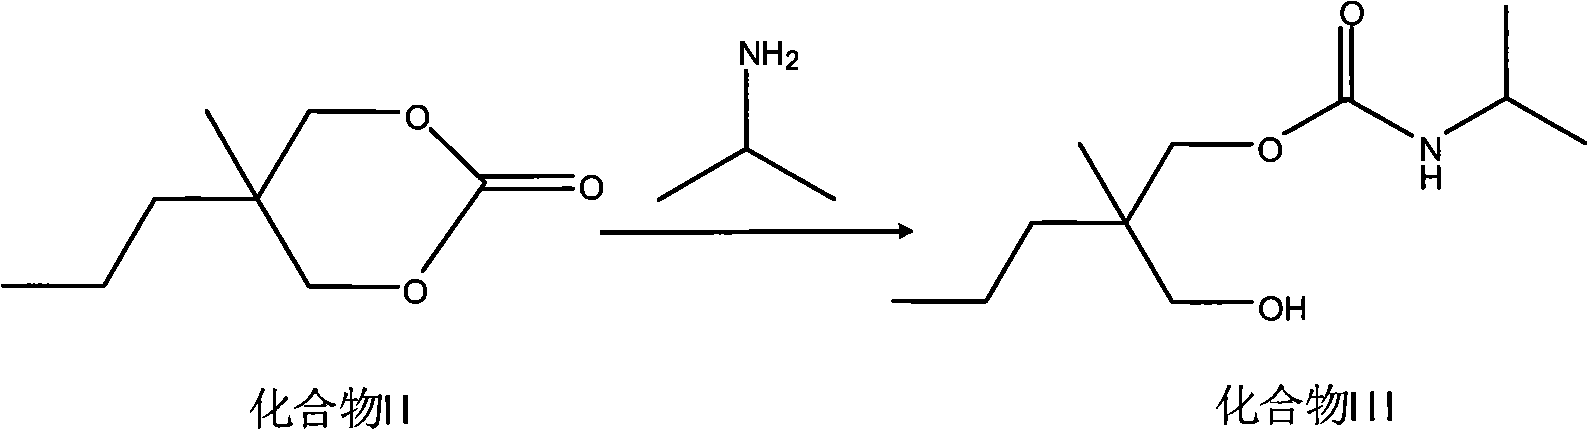 Method for synthesizing 5-methyl-5-propyl-1,3-dioxane-2-ketone and carisoprodol